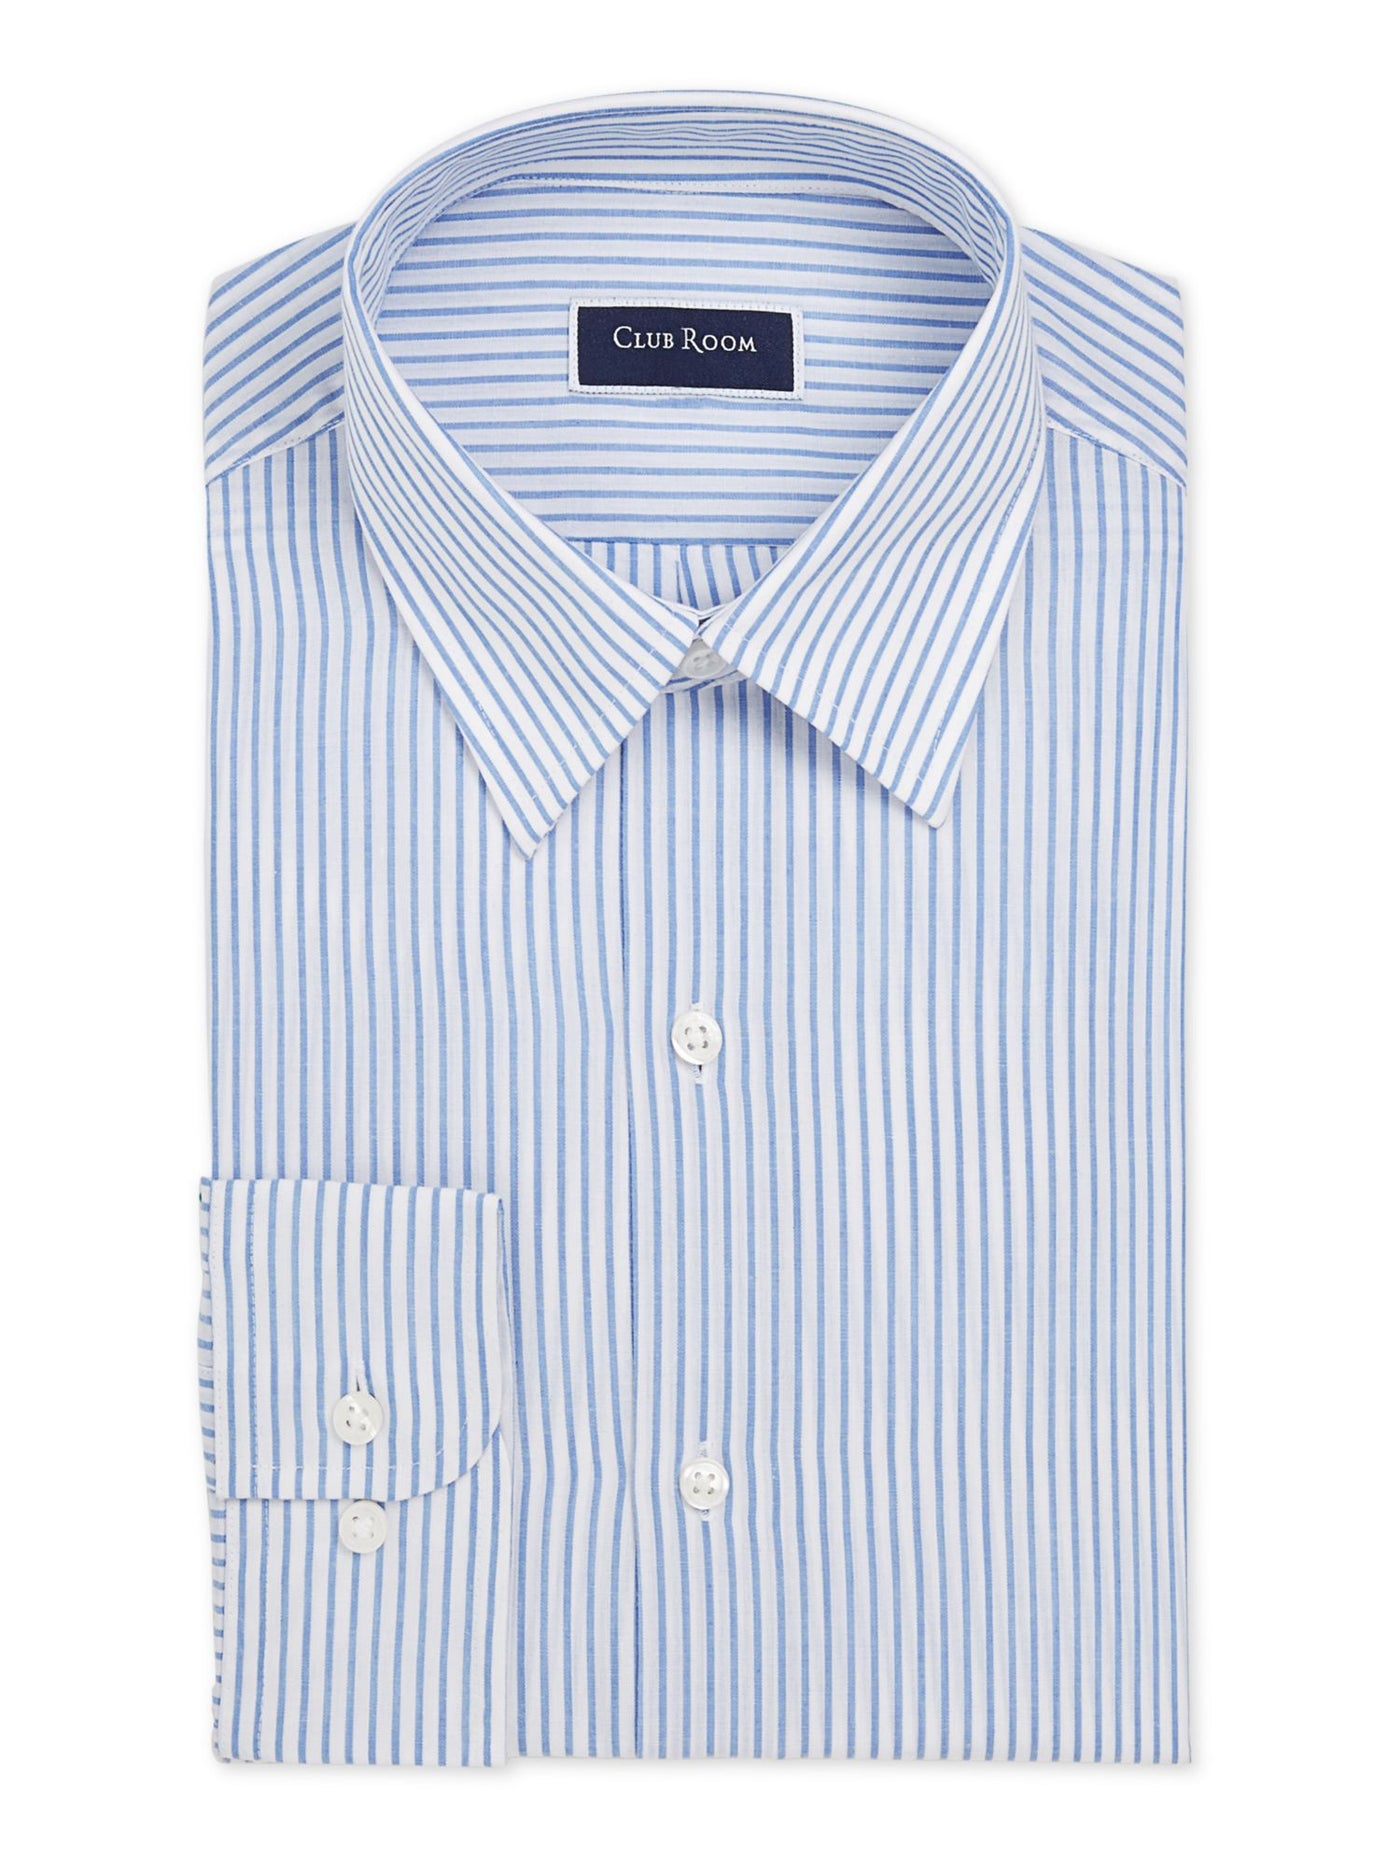 CLUBROOM Mens Blue Striped Collared Dress Shirt 17.5- 34/35